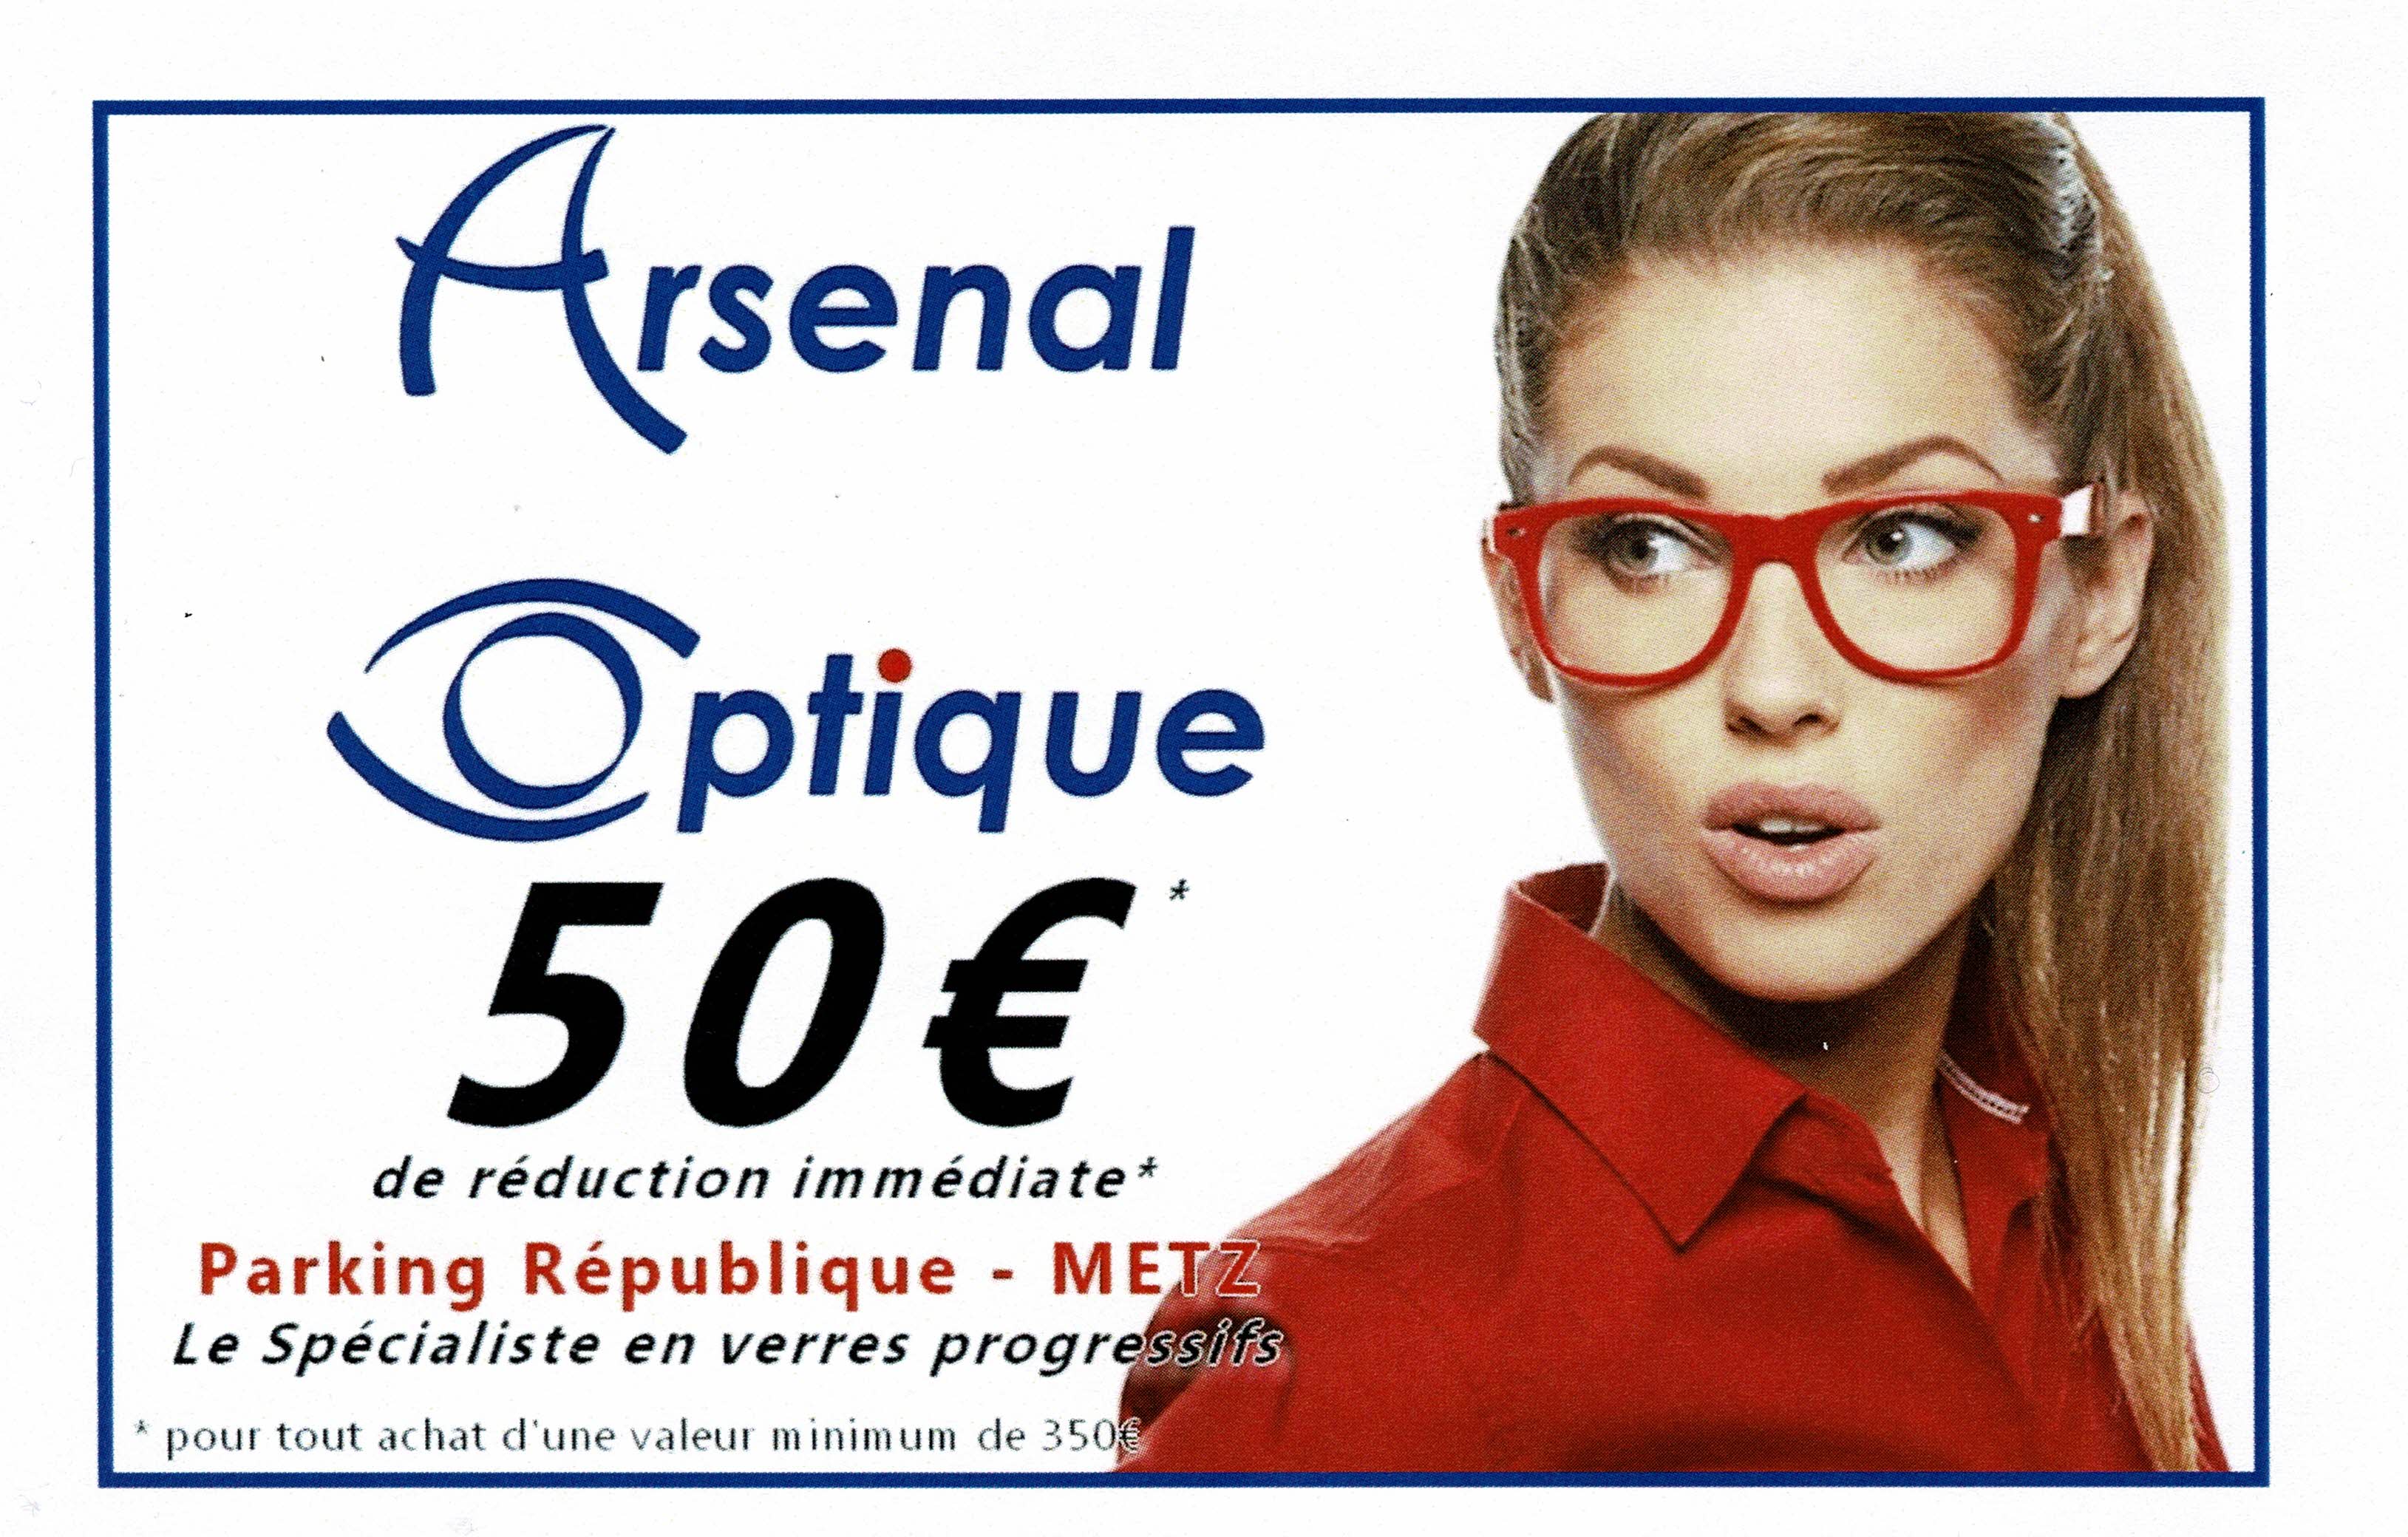 Arsenal Optique